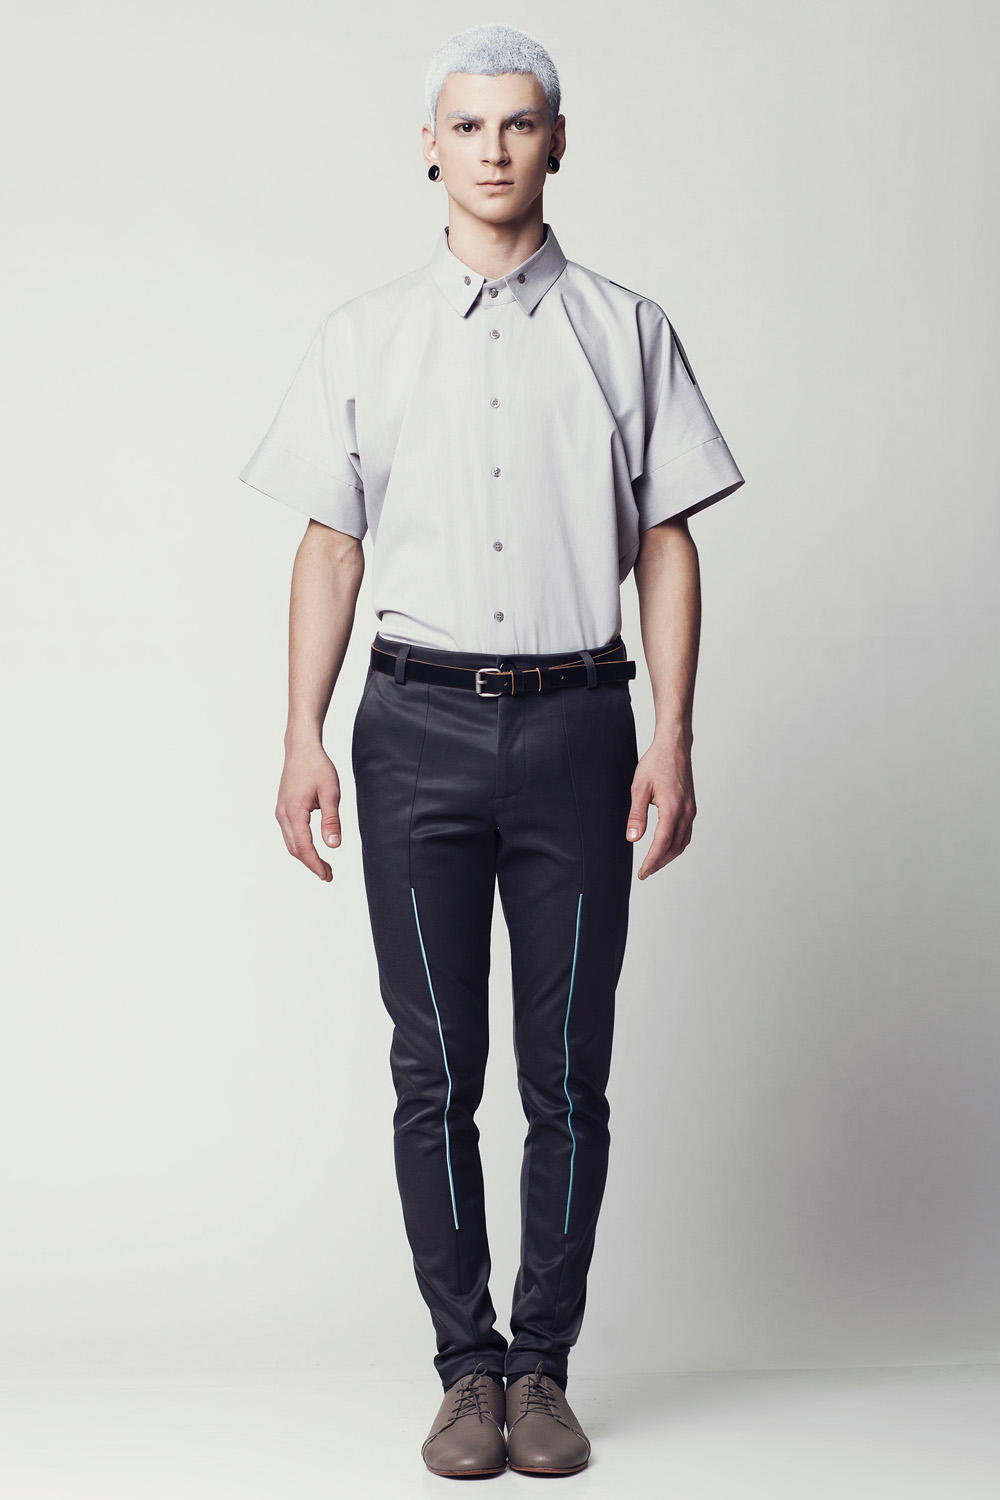 ELIRAN NARGASSI SPRING/SUMMER 2014 - Fashionably Male